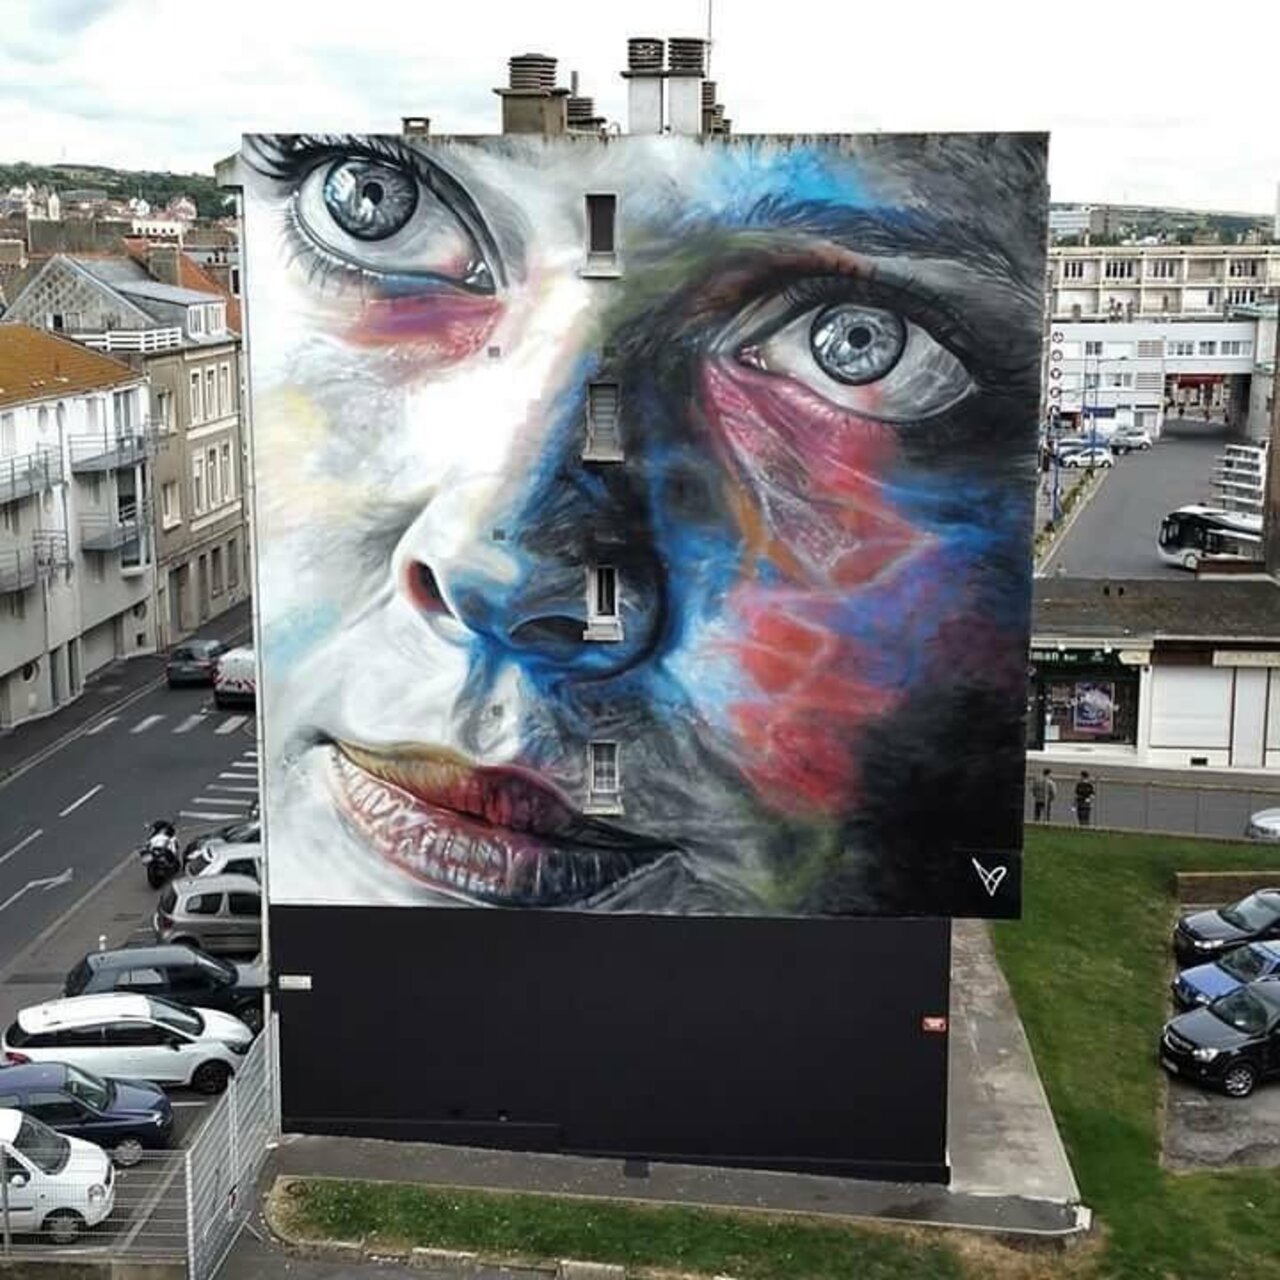 RT GoogleStreetArt: New Street Art by David Walker found in Boulogne Sur Mer France #art #graffiti #mural #stree… https://t.co/SaDQ3jwFJI